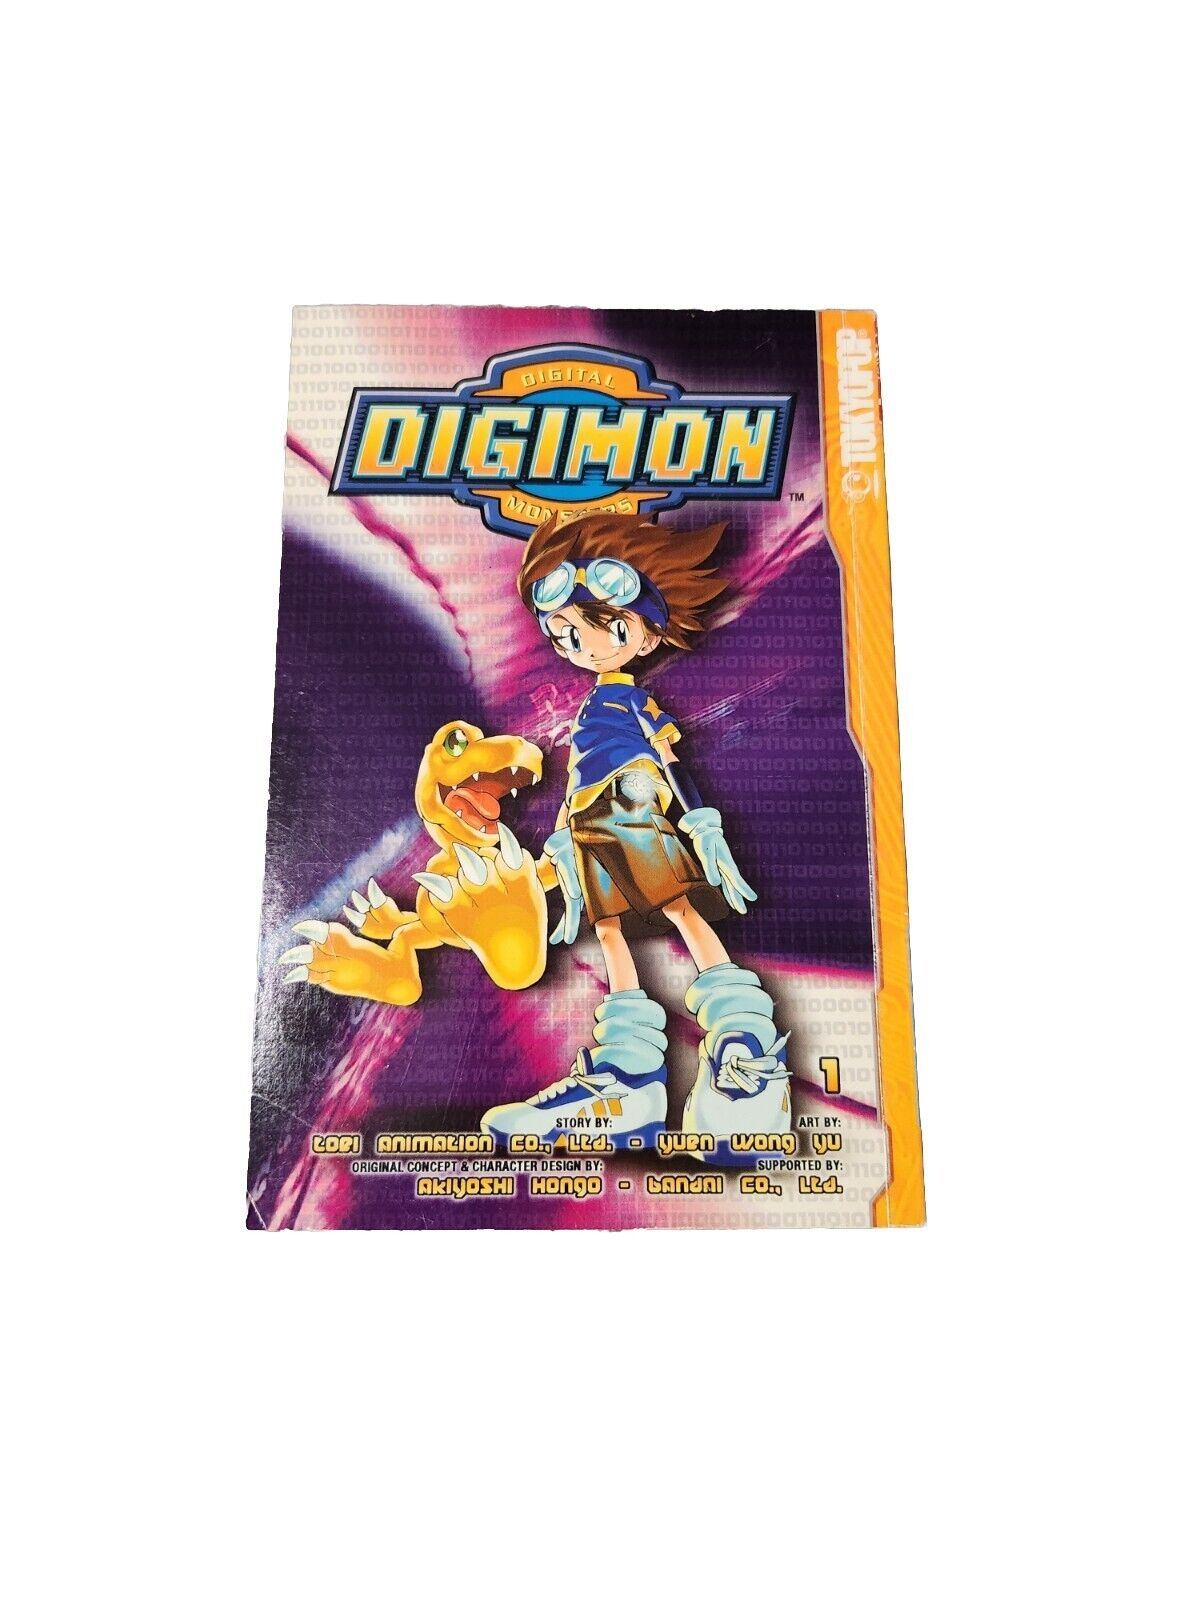 Digimon volume 1 by Akiyoshi Hongo 2003 OOP Manga